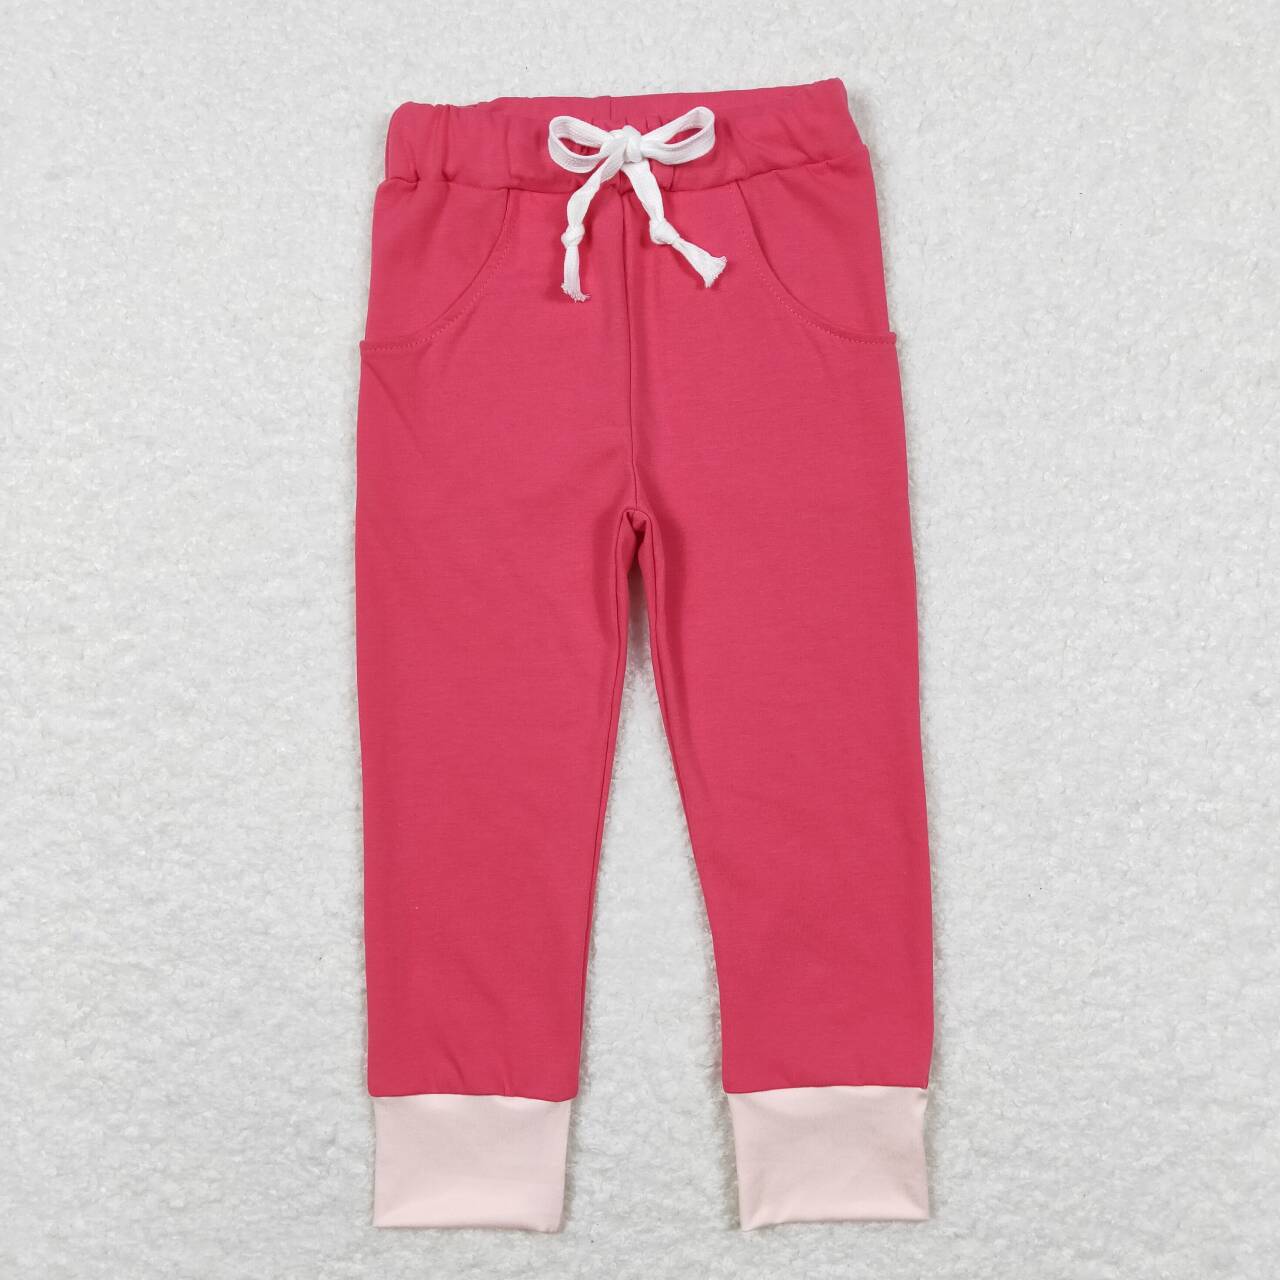 GLP1021 Pink BA Print Hoodie Top Girls Clothes Set